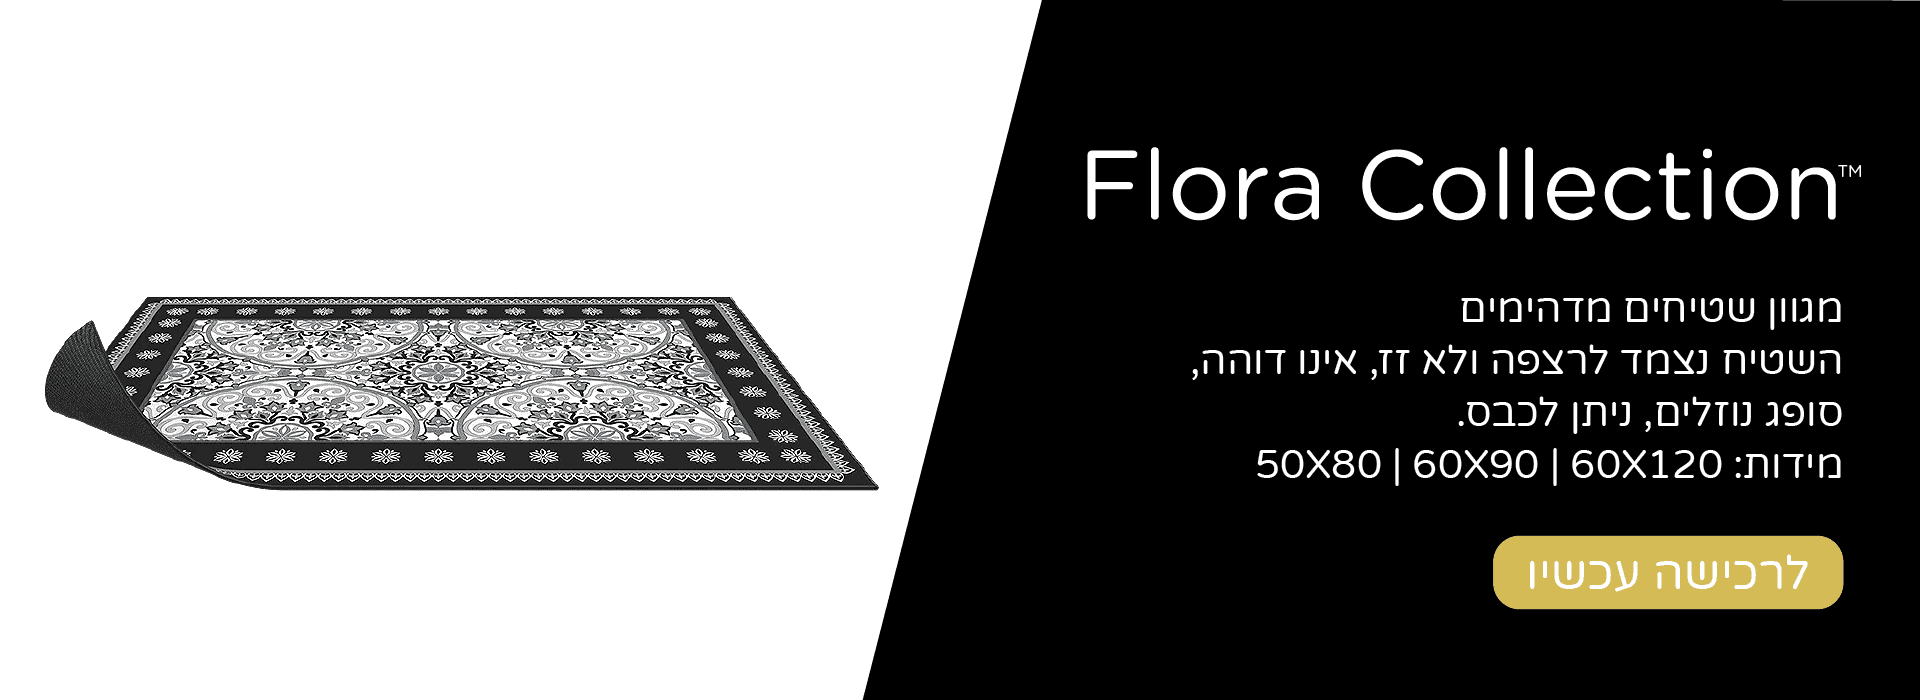 flora-web